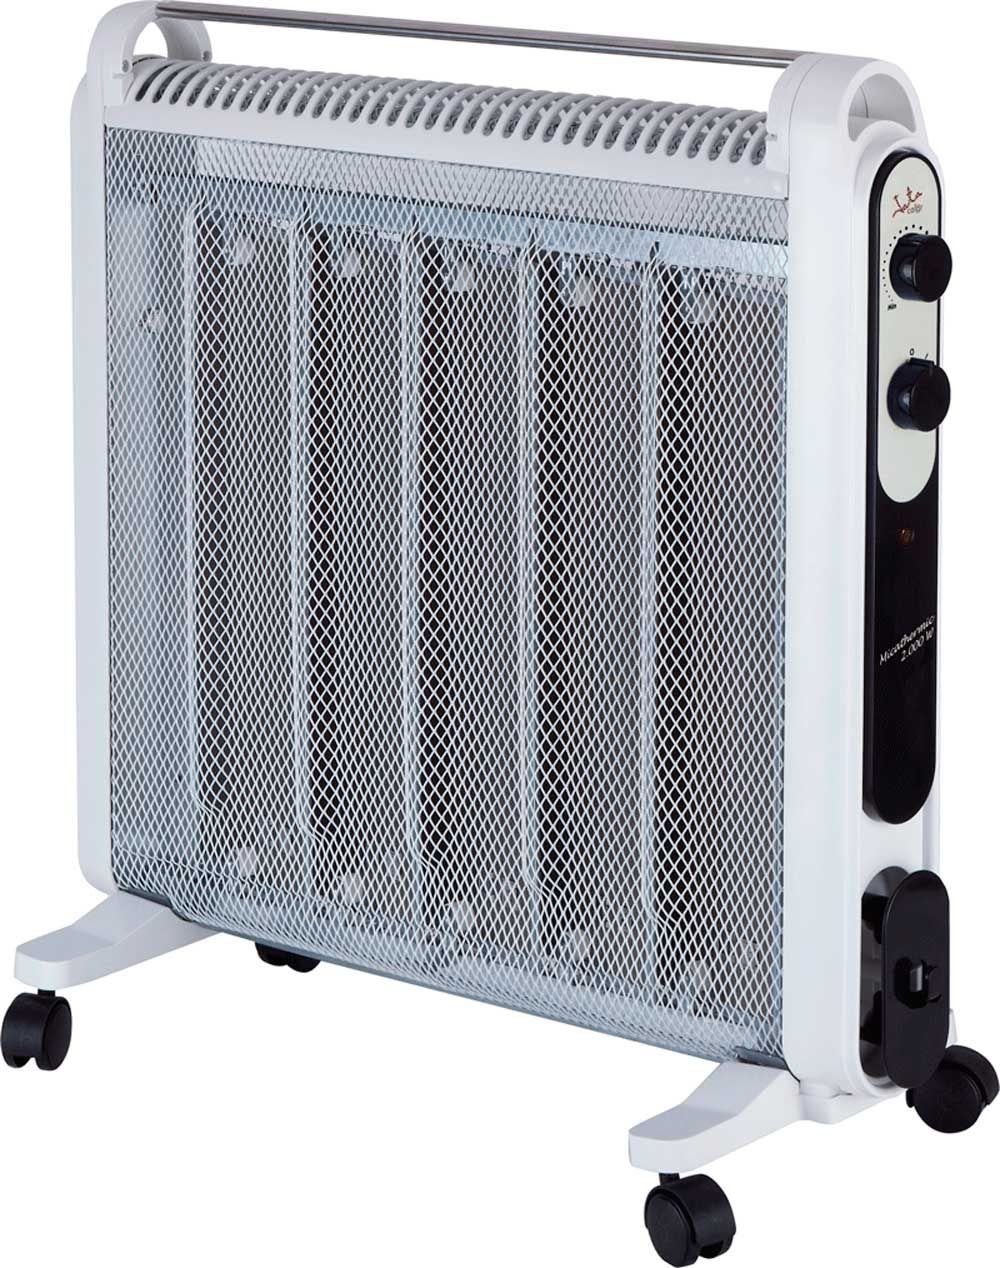 Jata Heizgerät Micathermic Heater RD227B 2000W, 2000 W, Leise, Lautlos,  Sparsam, Energie sparen, Elektroheizung online kaufen | OTTO